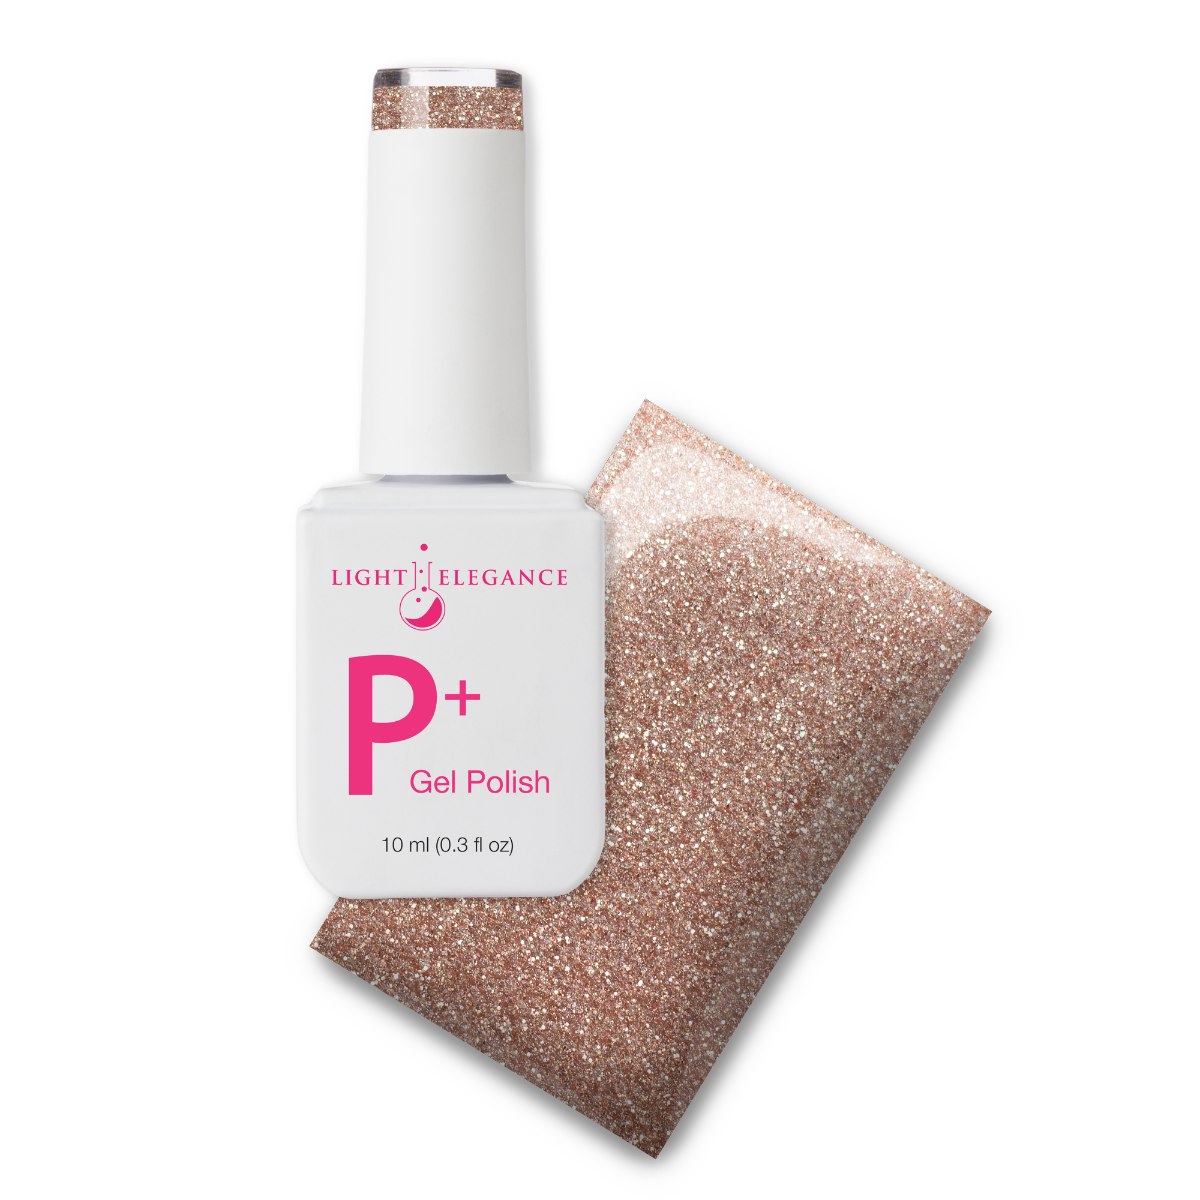 Light Elegance P+ Soak Off Glitter Gel - Pints & Quartz :: New Packaging